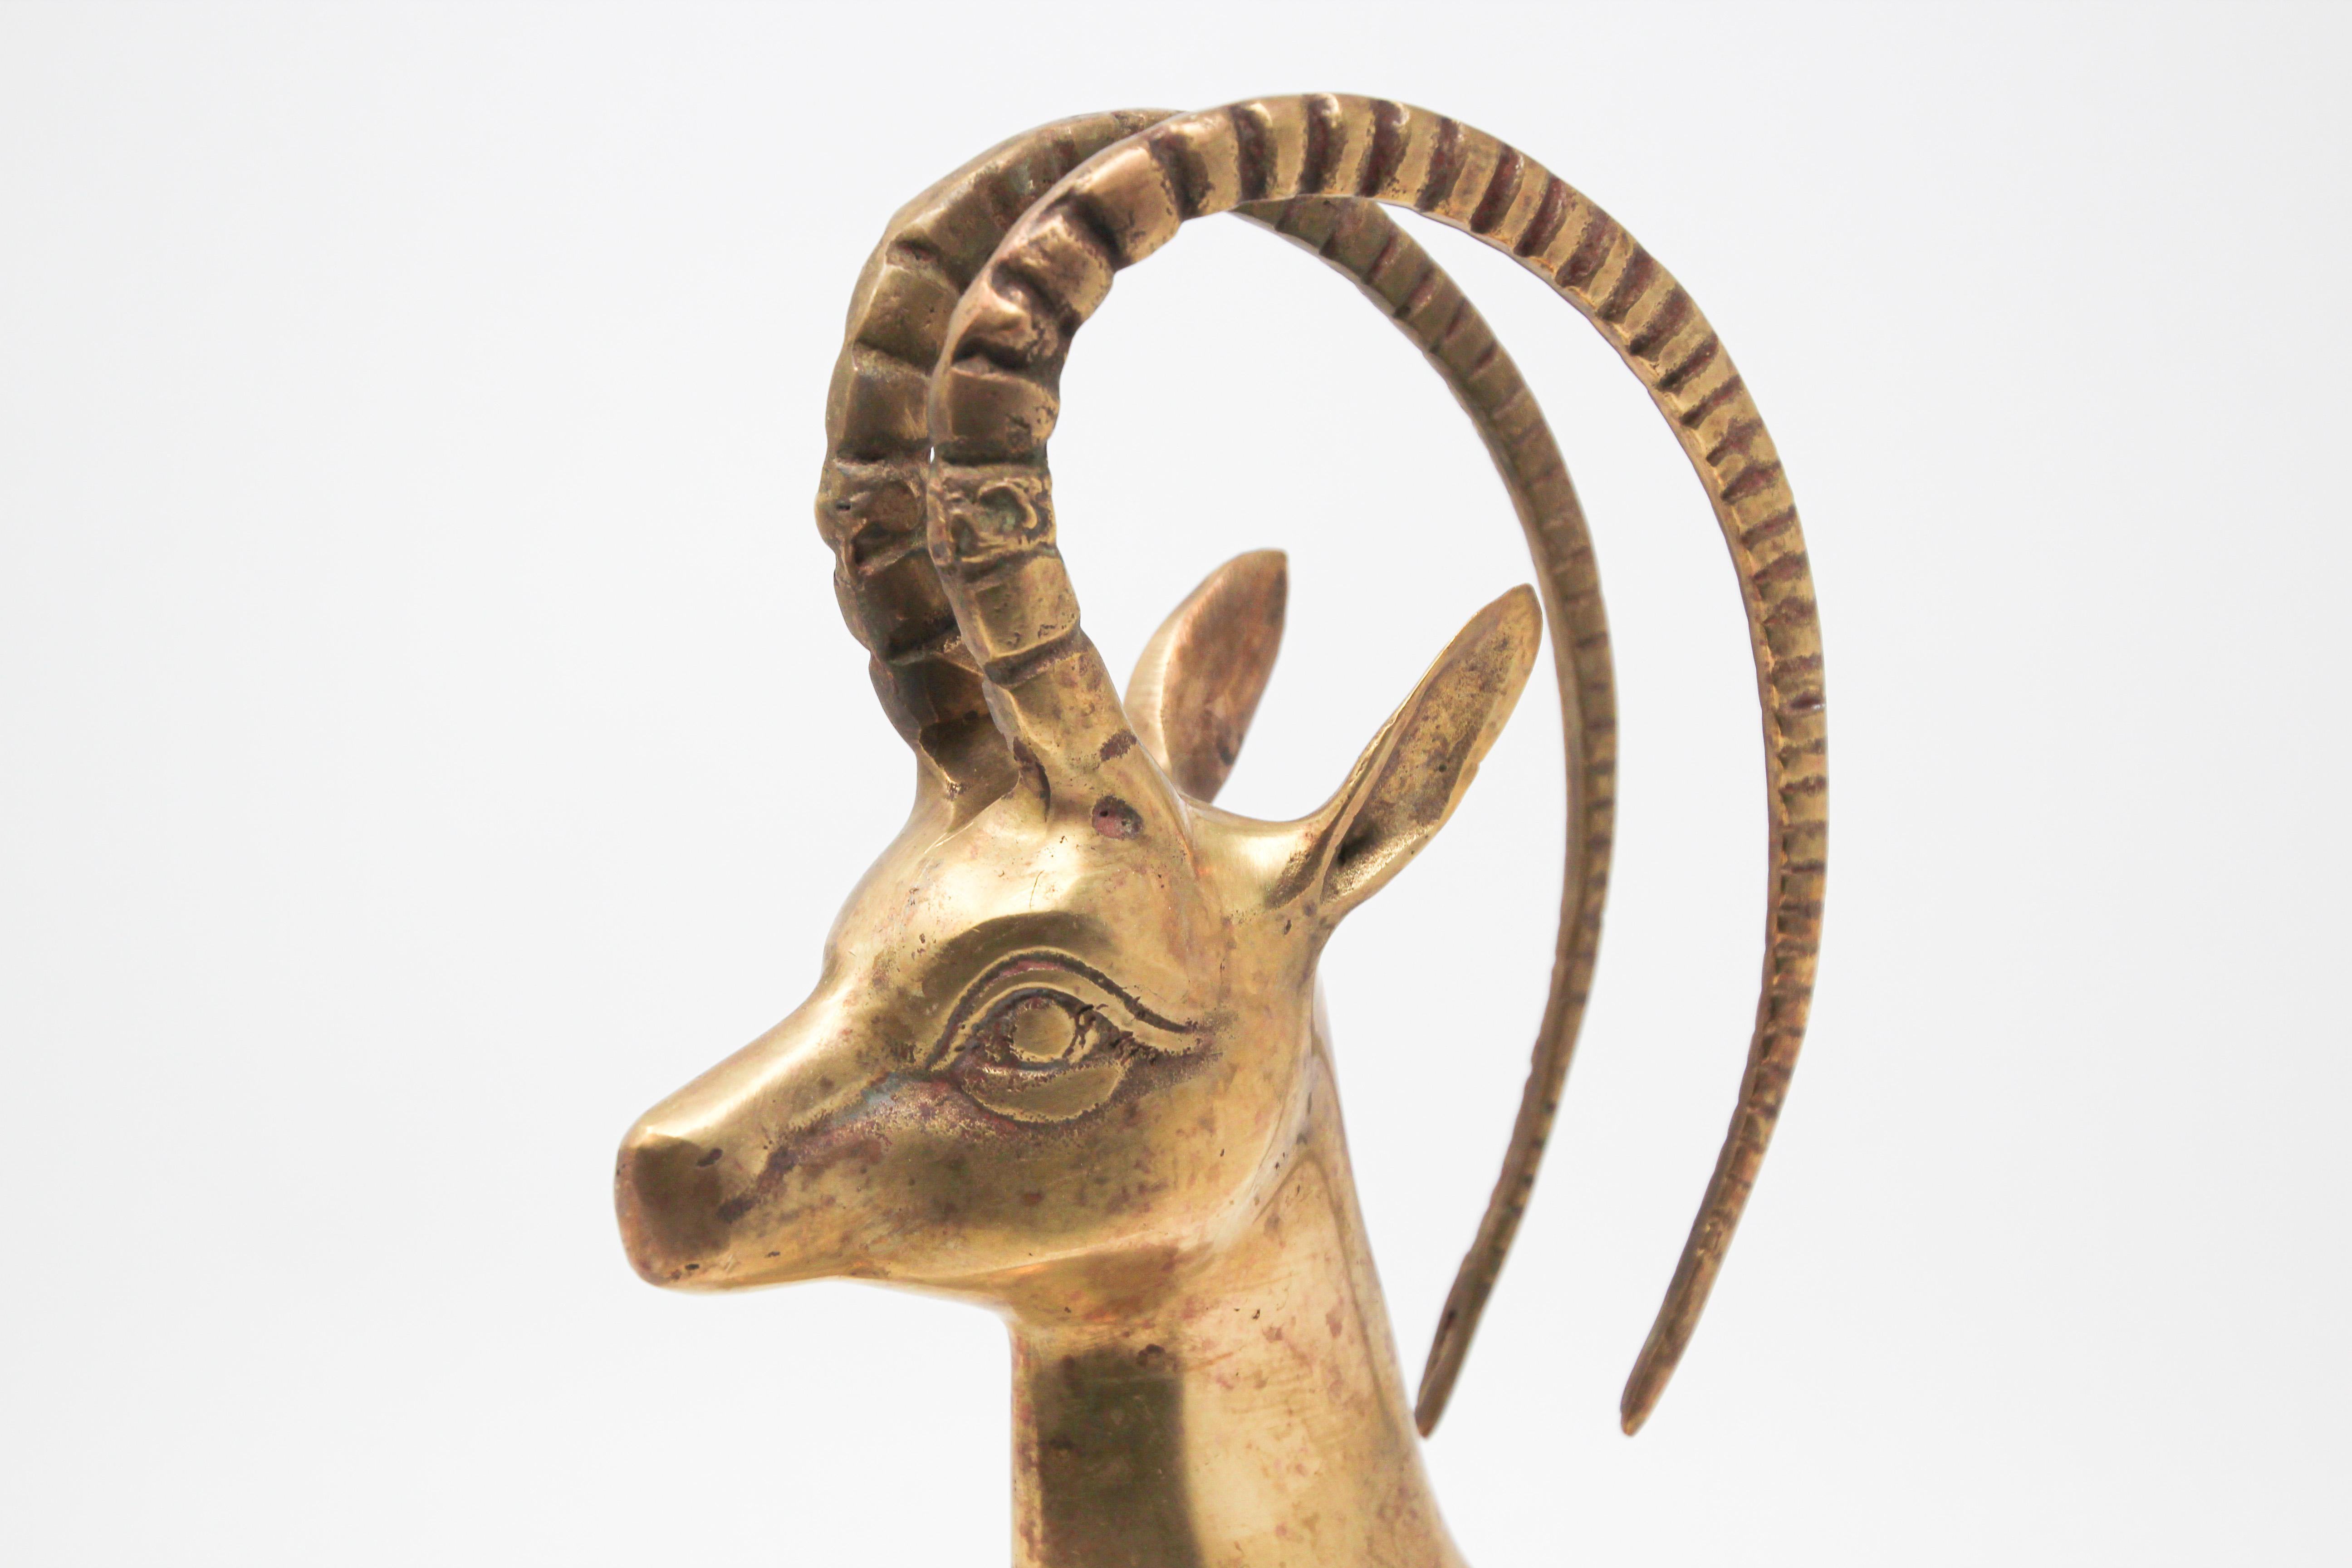 1960s vintage cast brass sculpture of gazelle ibex head
Gazelle head Hollywood Regency brass gazelle head.
The perfect midcentury / Hollywood Regency accent.
Cast brass metal animal sculpture of a gazelle, deer.
A true Hollywood Regency